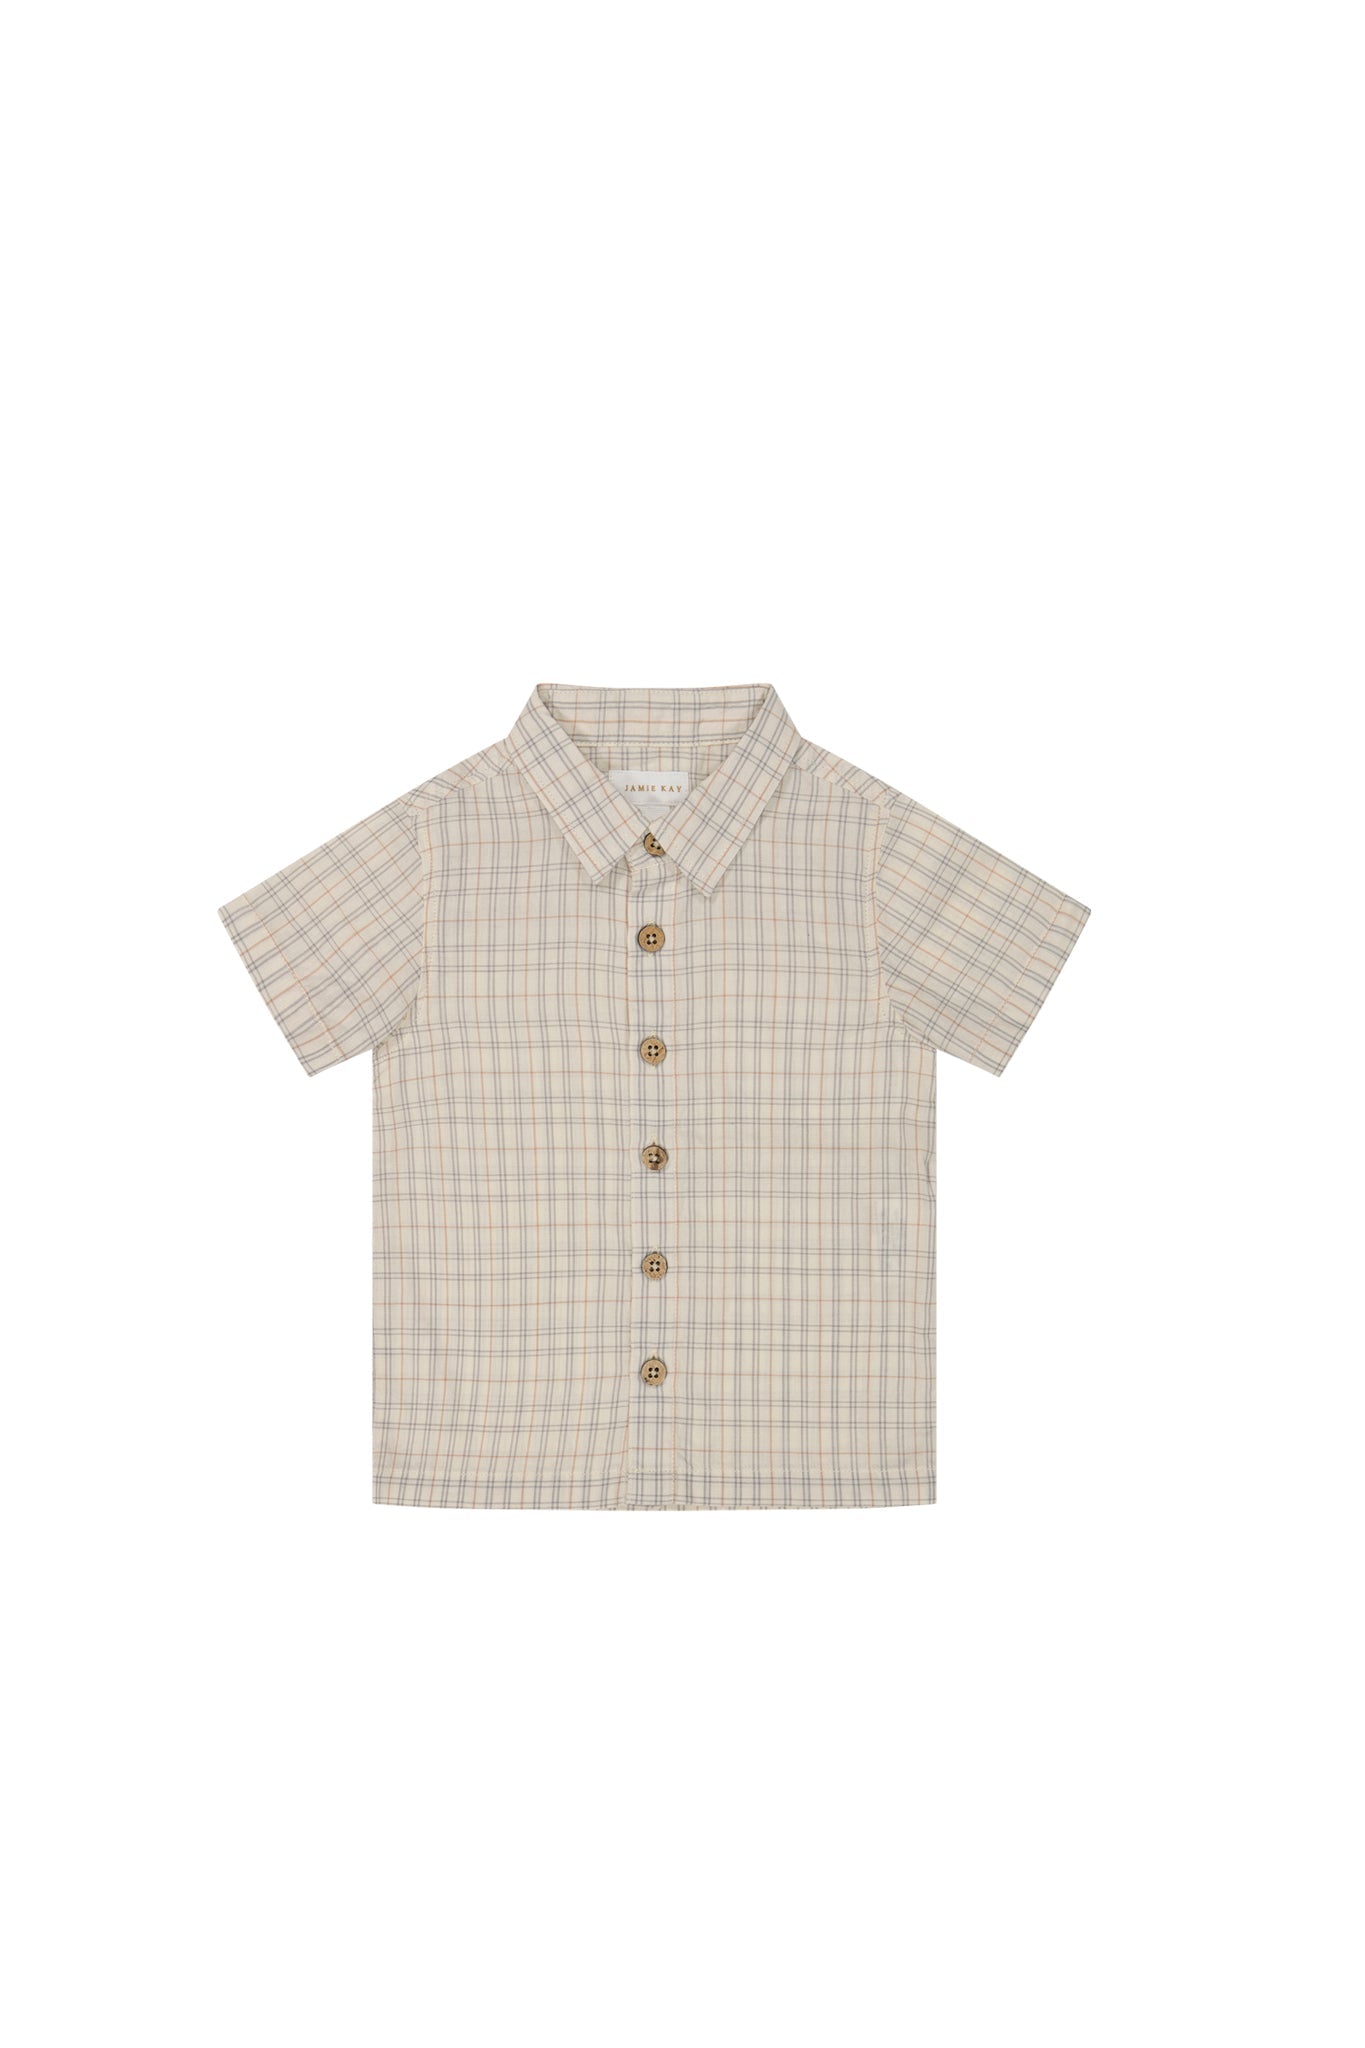 Organic Cotton Quentin Short Sleeve Shirt - Billy Check